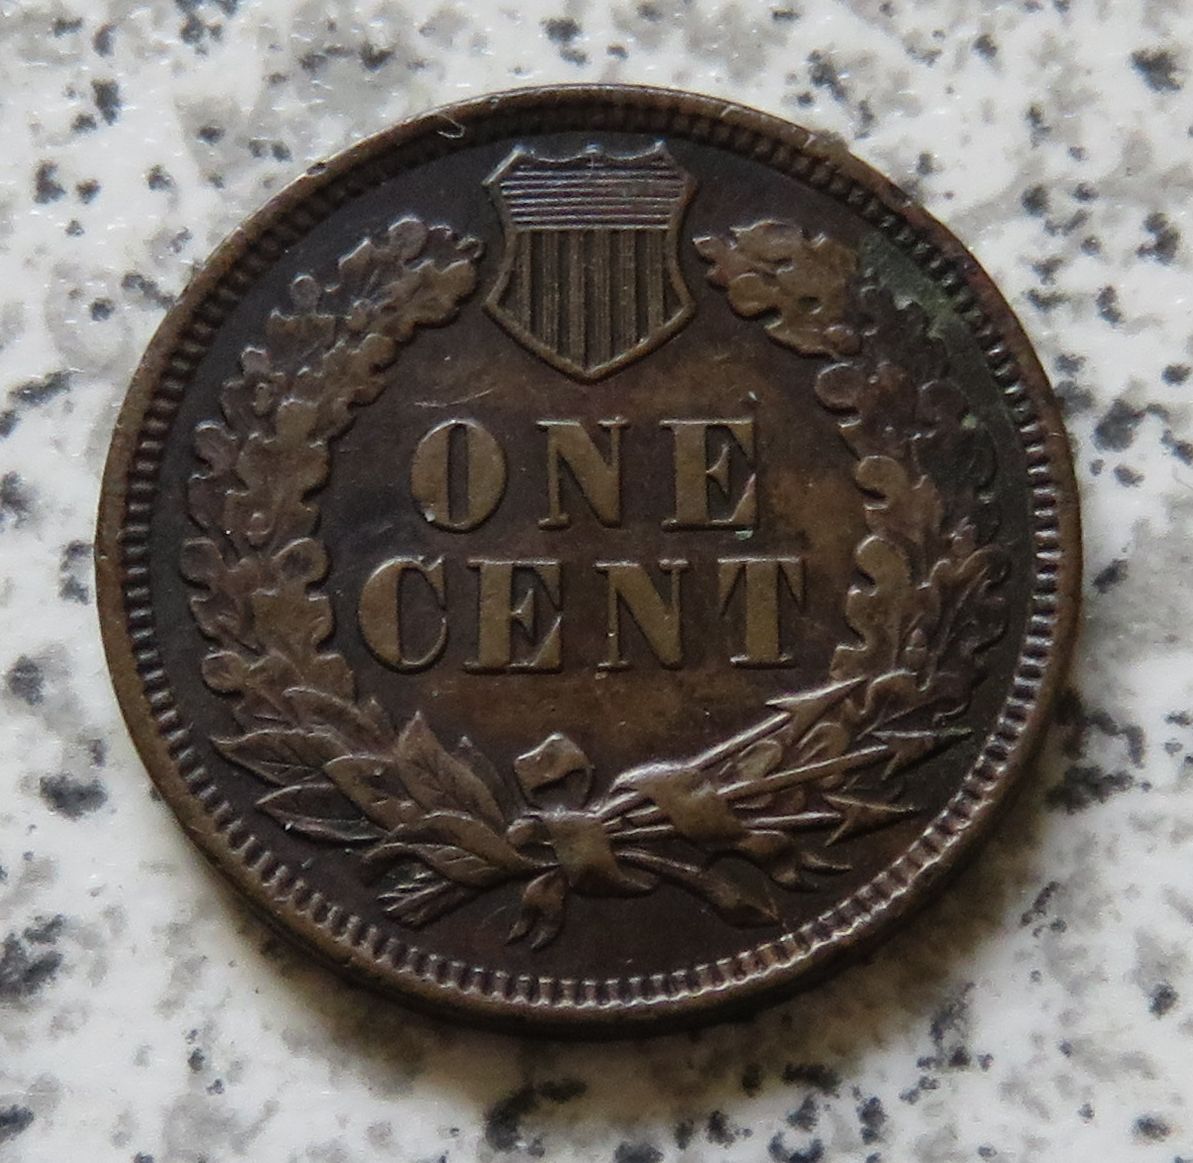  USA Indian Head Cent 1900   